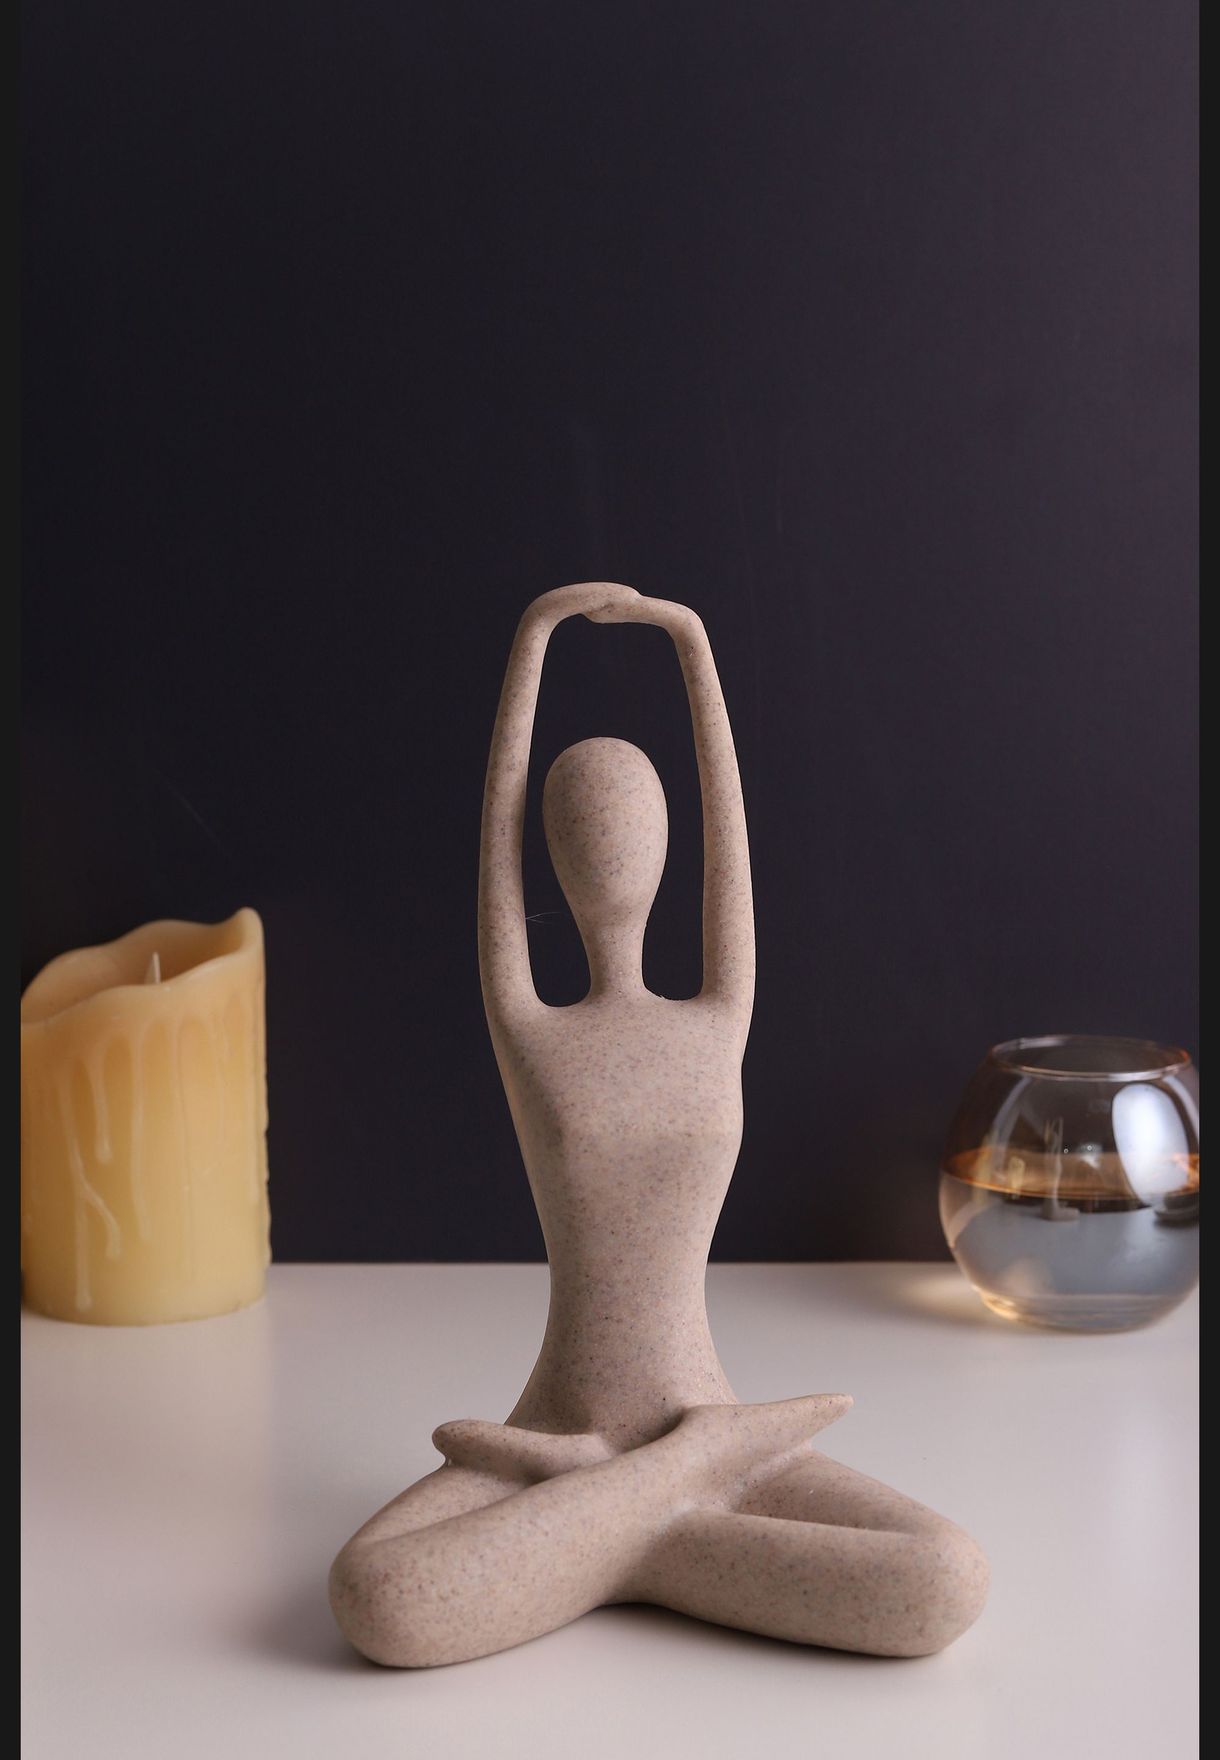  Figurine Shaped Solid Modern Ceramic Showpiece For Home Decor 